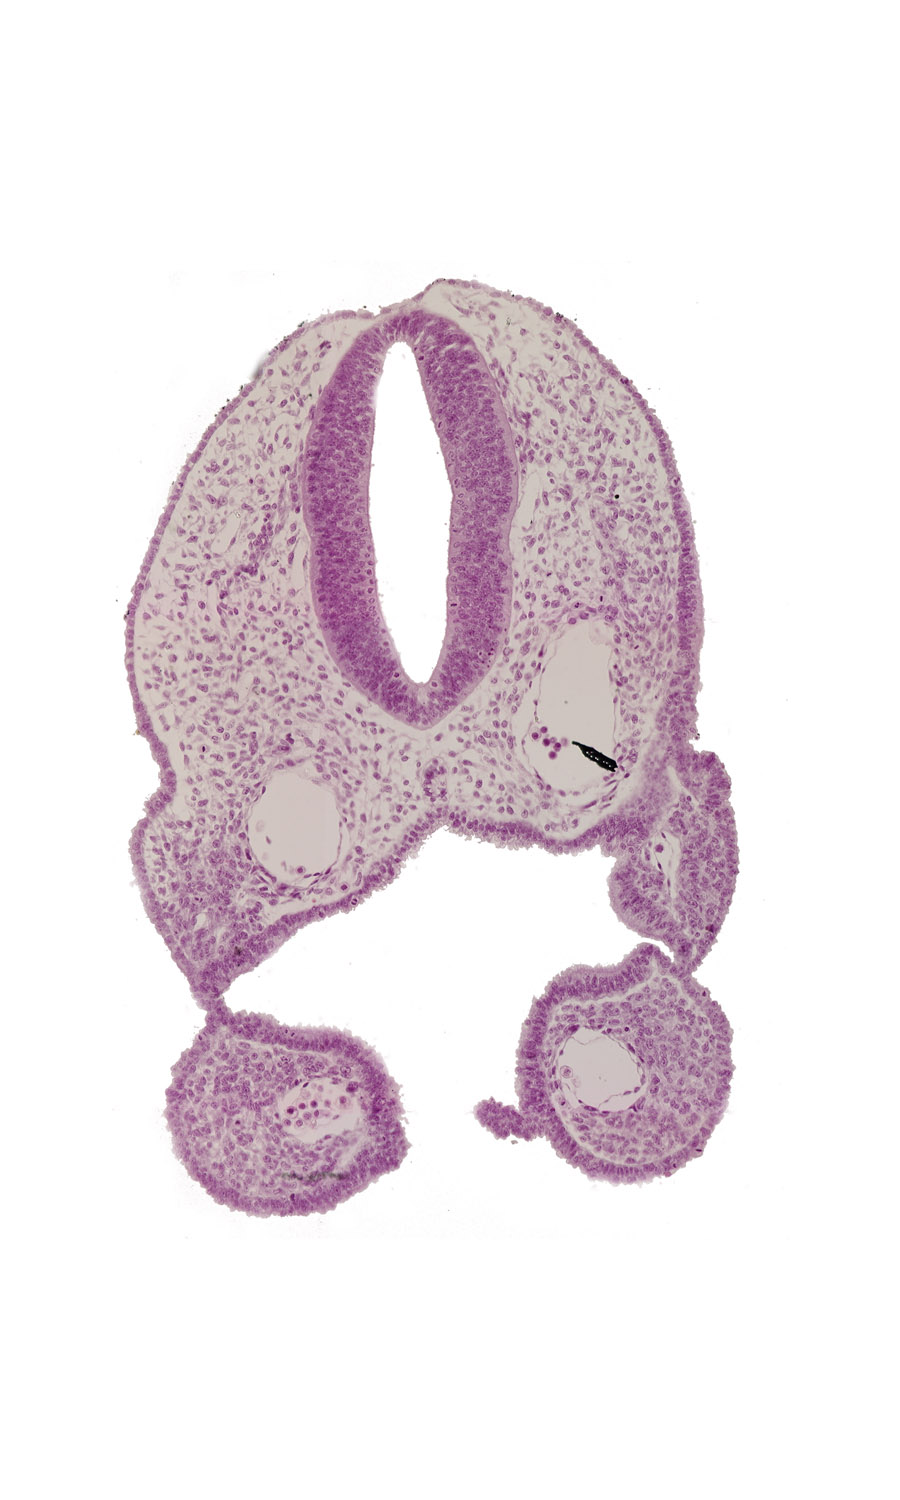 aortic arch 2, dorsal aorta, ectodermal ring, glossopharyngeal neural crest (CN IX), notochord, pharyngeal arch 1, pharyngeal arch 2, pharyngeal groove 1, pharyngeal groove 2, pharyngeal membrane 1, pharynx, remnant of oropharyngeal membrane, rhombencephalon (Rh. 6), rhombencoel (fourth ventricle), stomodeum